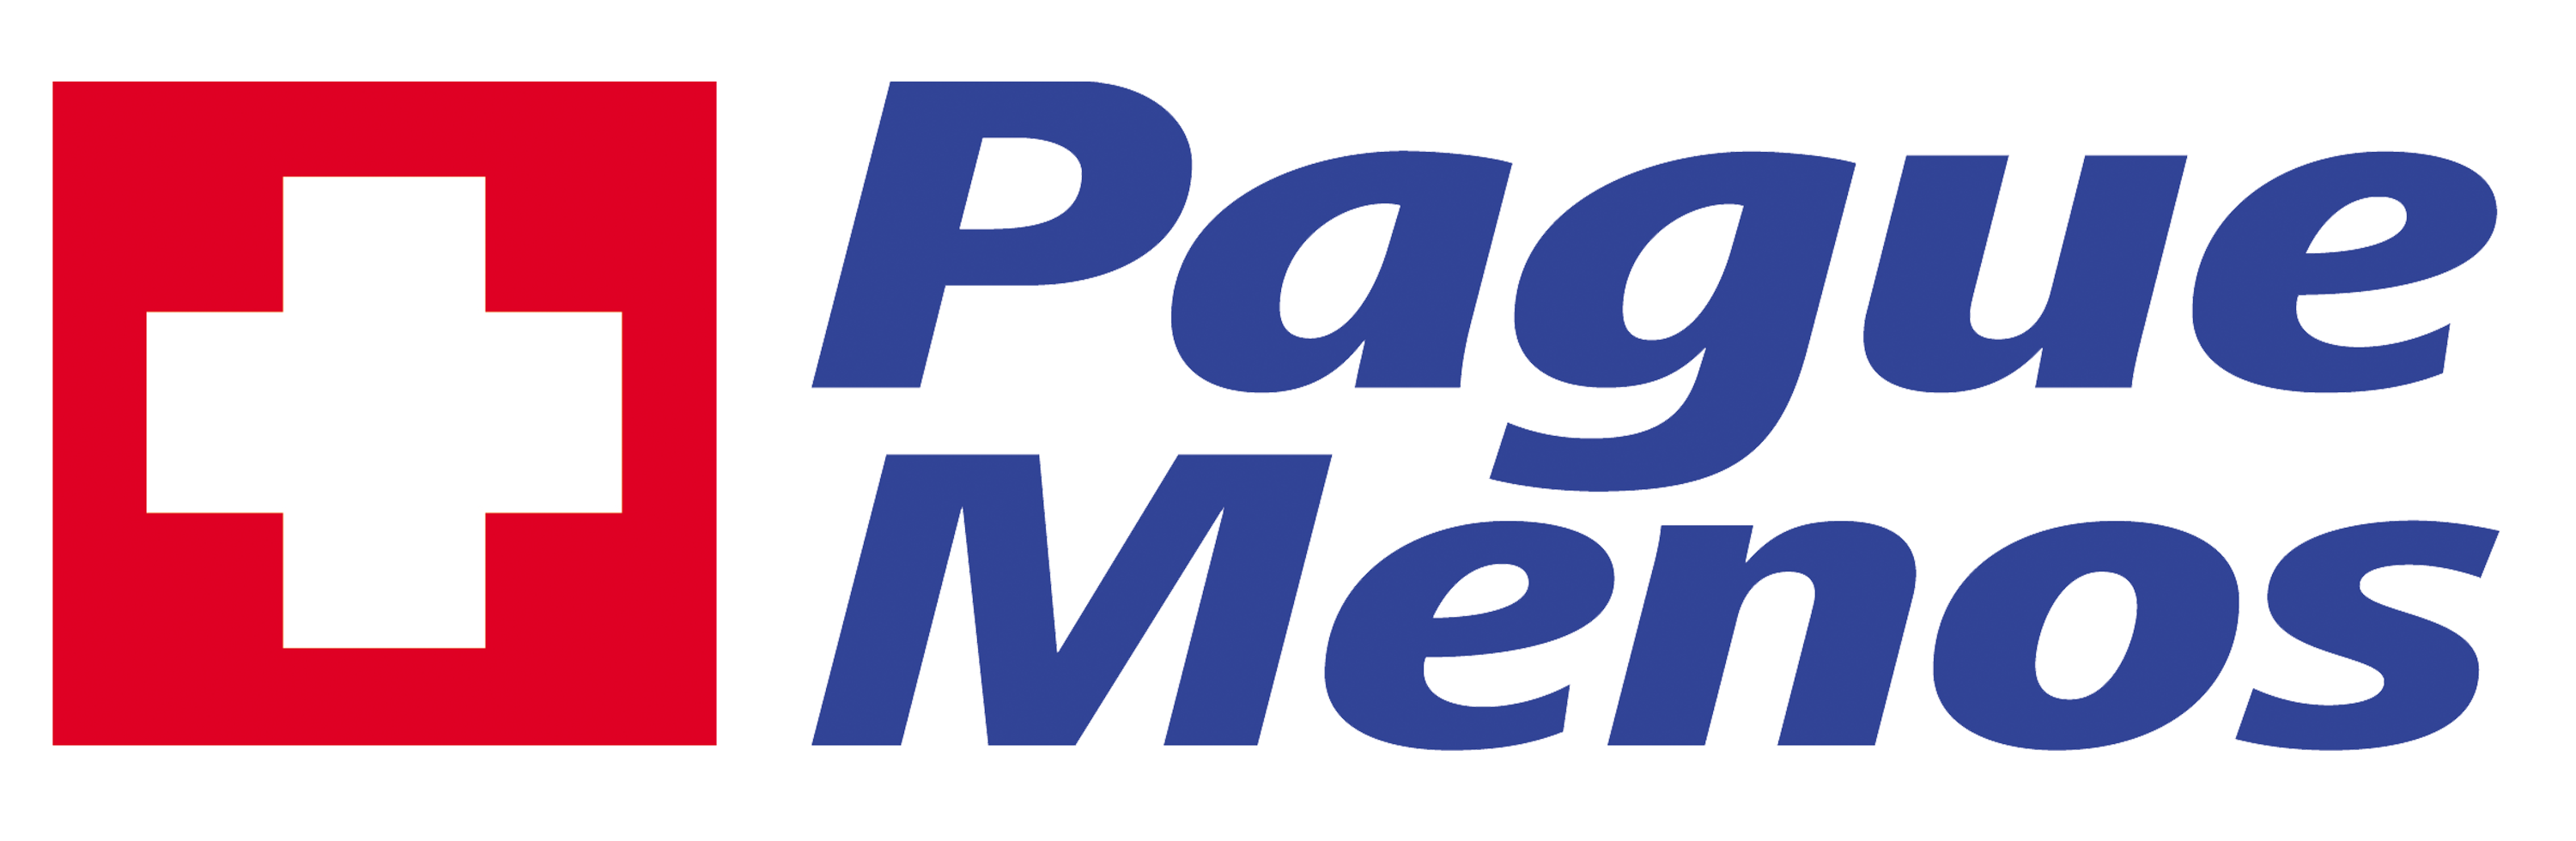 Farmacia Pague Menos - Abaetetuba - PA